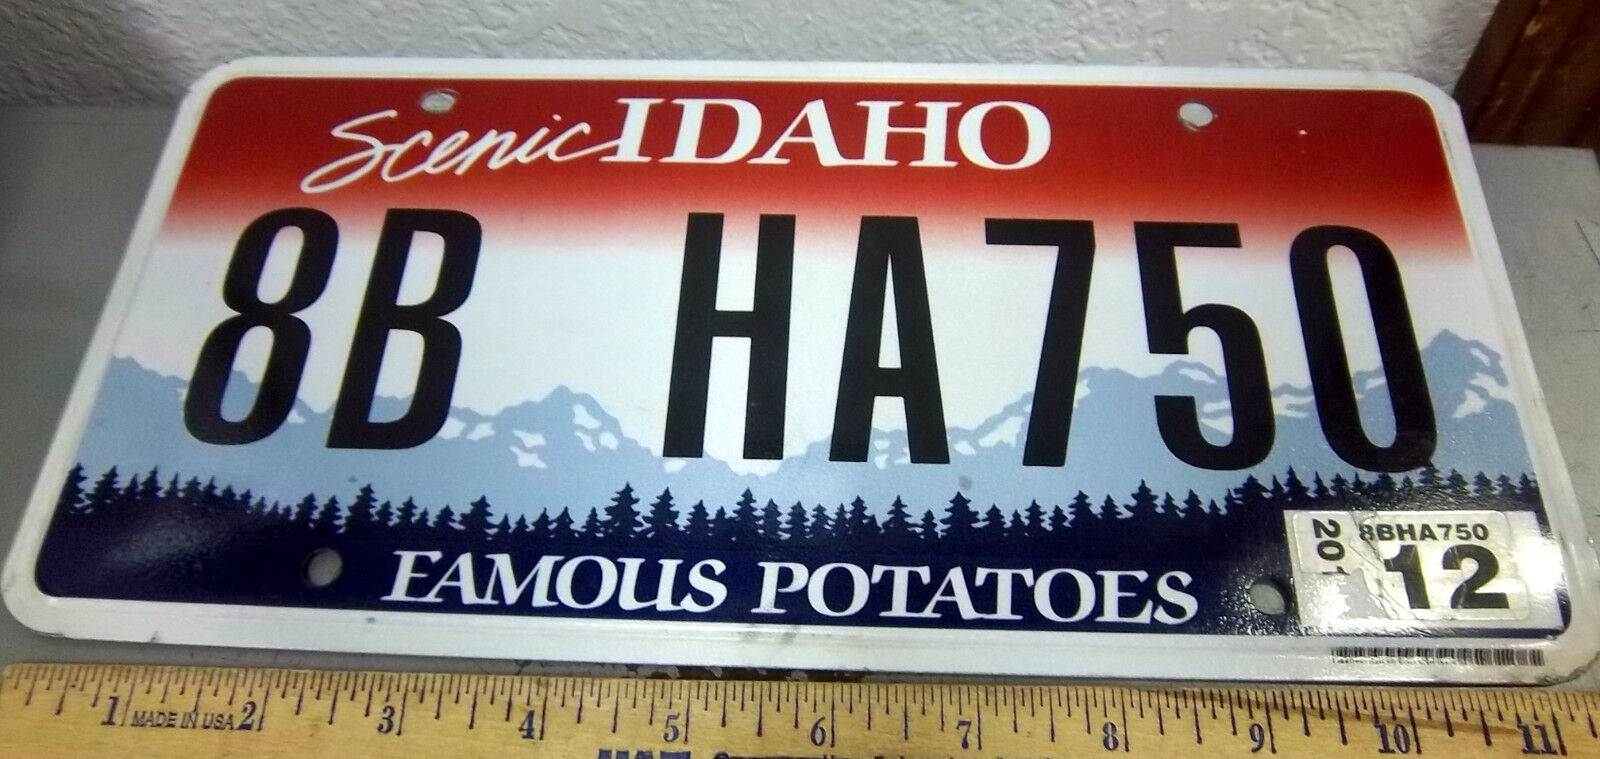 2012 Idaho LICENSE PLATE, 8B HA750, famous Potatoes, mtn scene, cool collectible